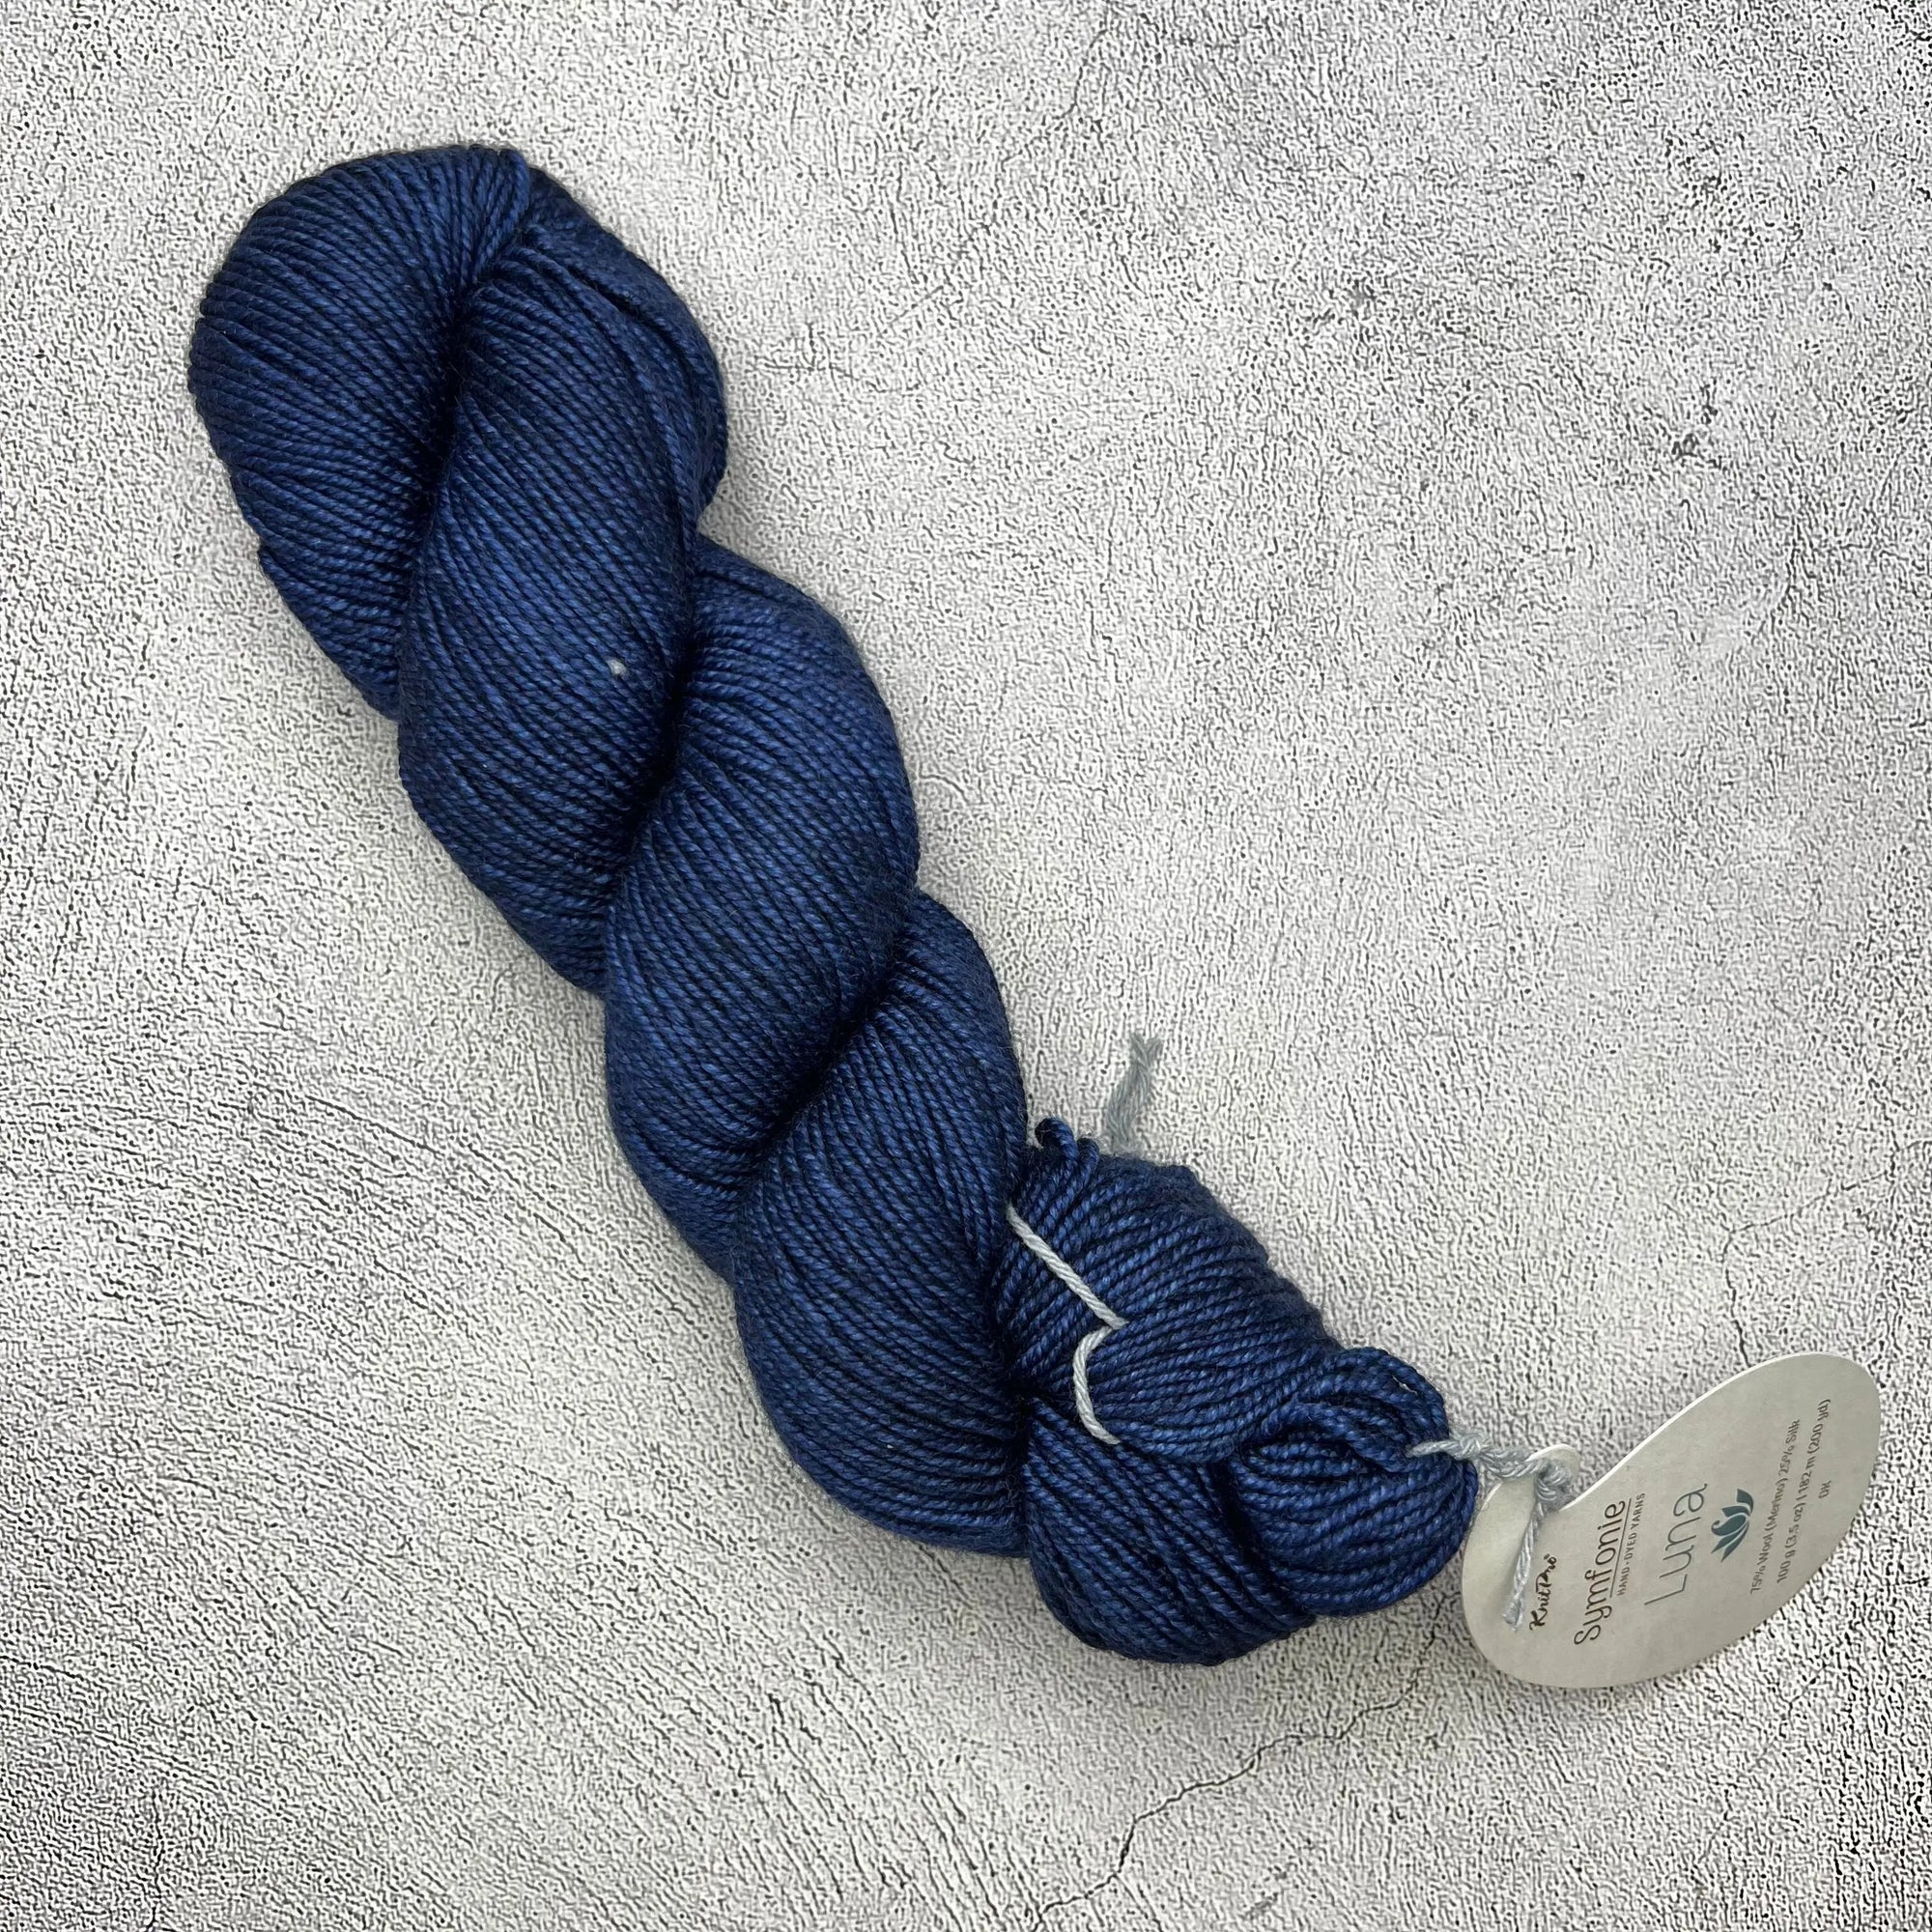 A skein of Knit Pro Symfonie Luna blue yarn on a concrete surface.